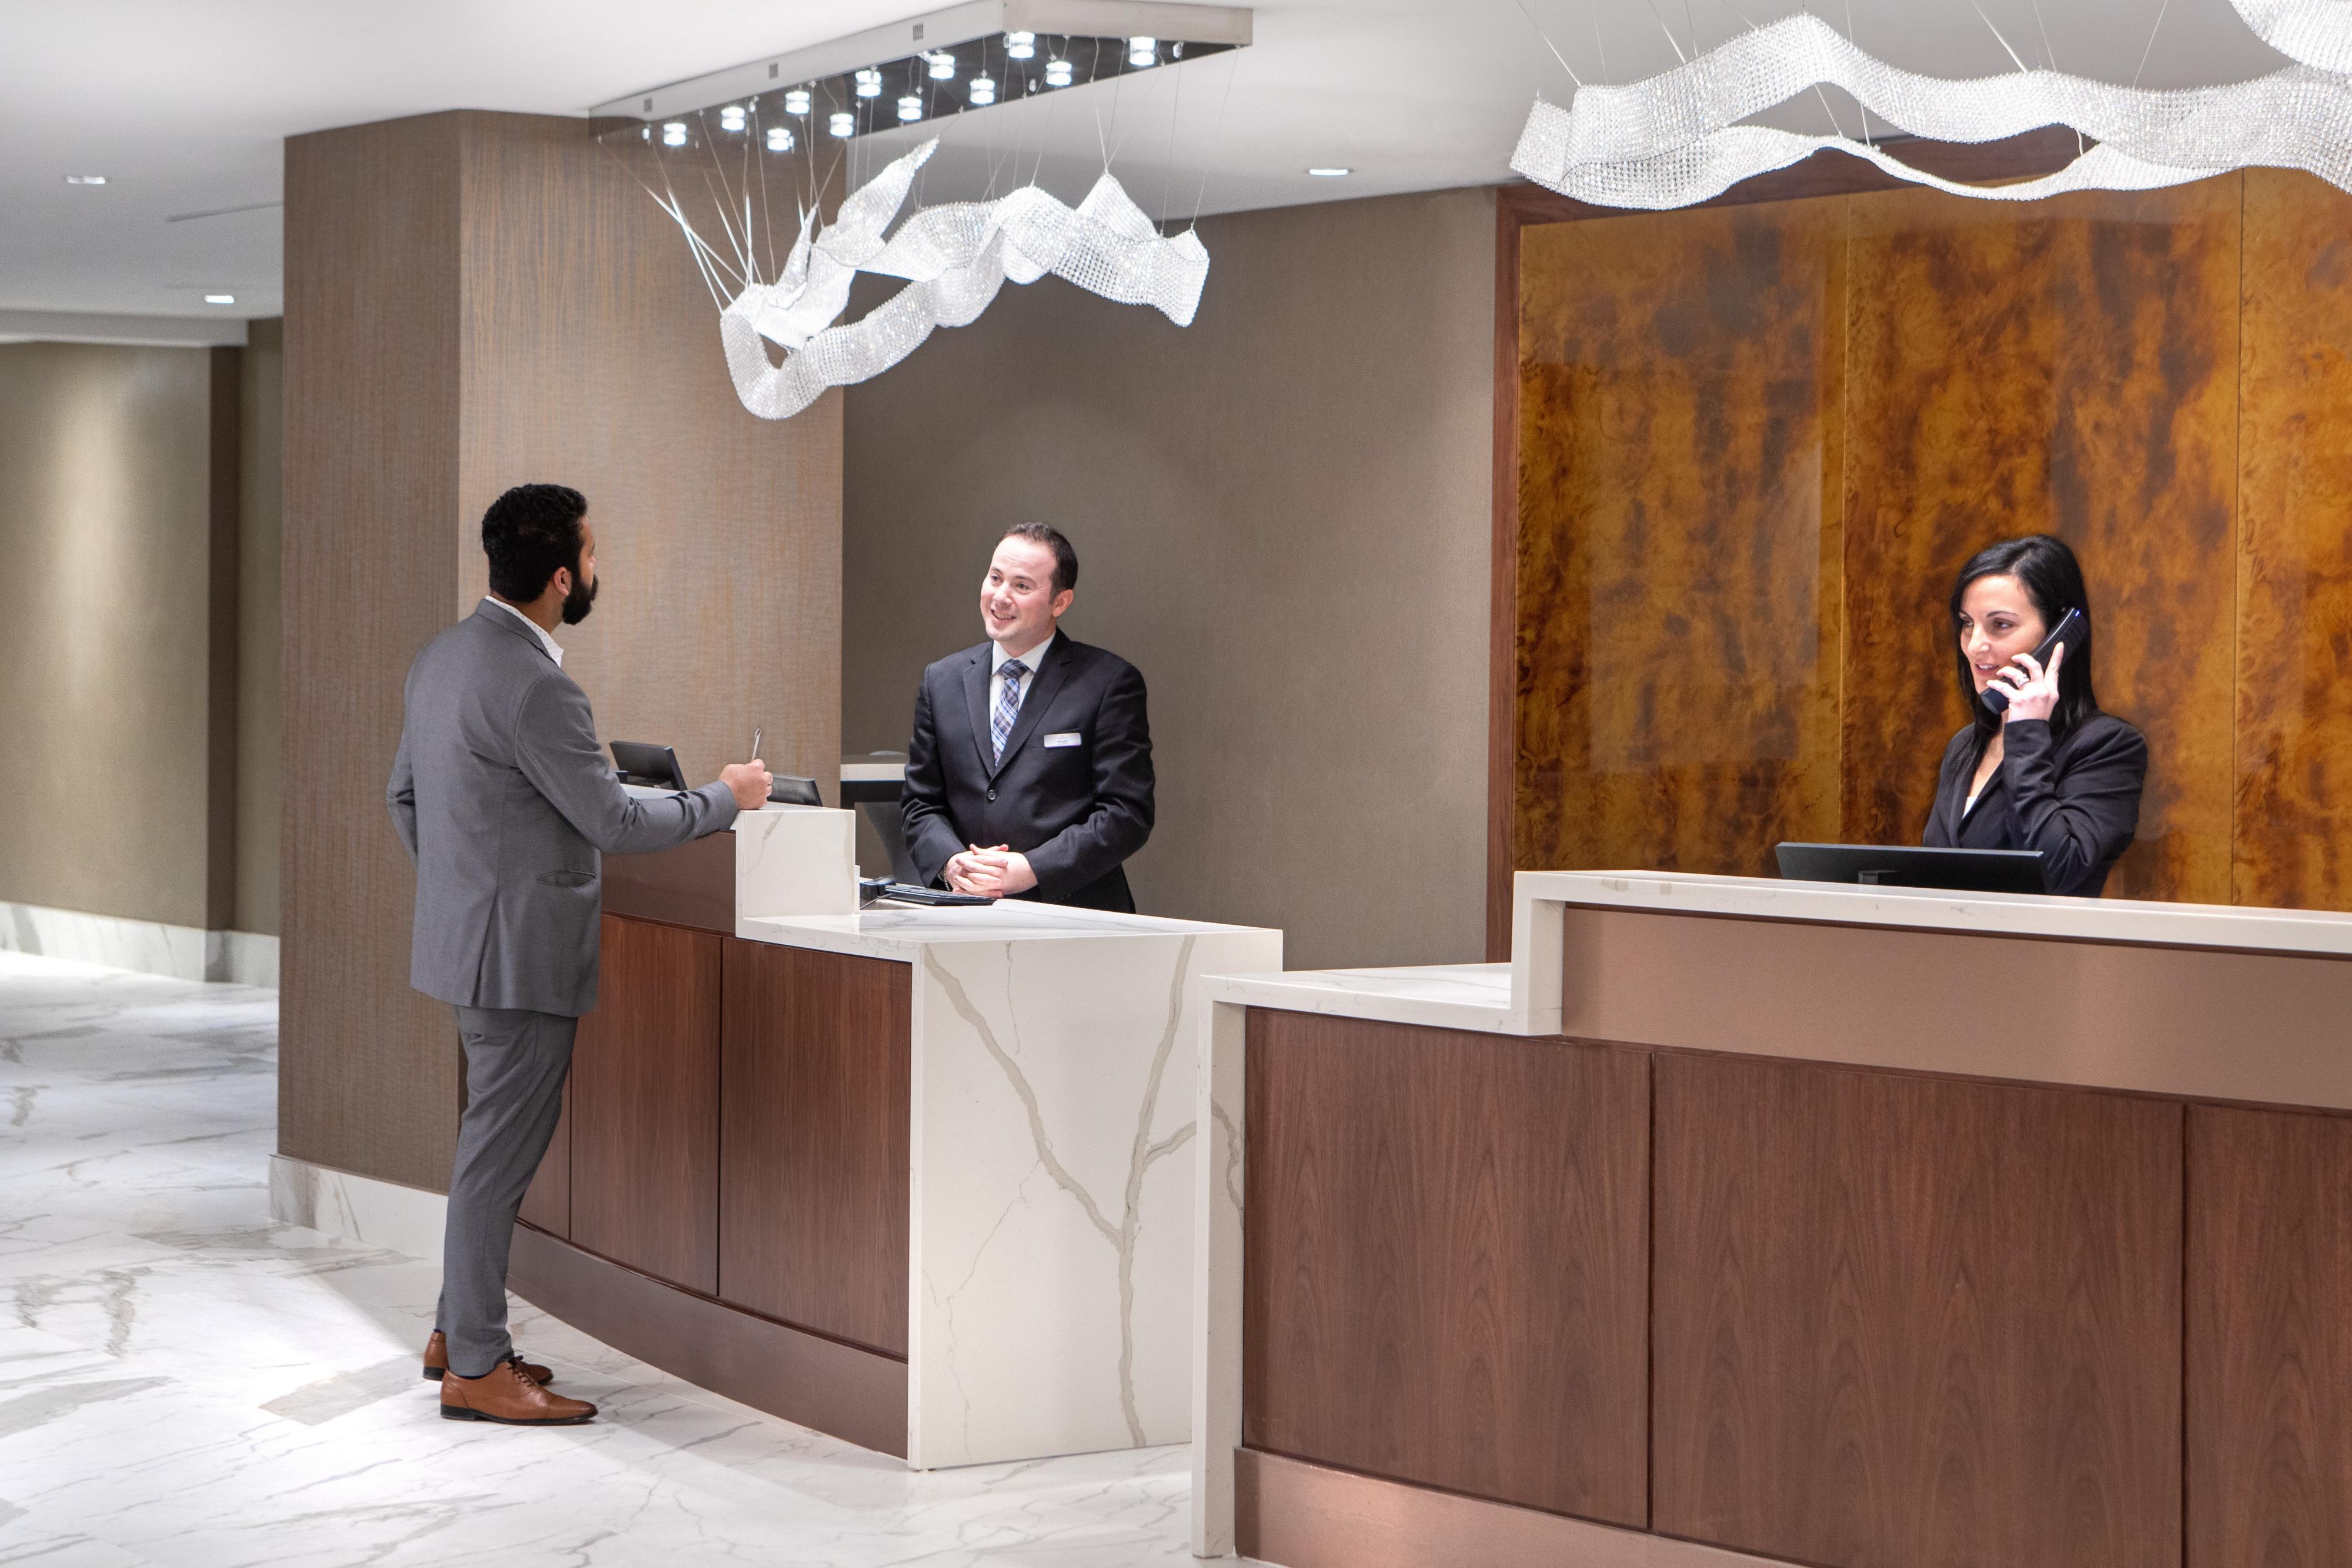 A premium, upscale Toronto Airport hotel experience awaits you 